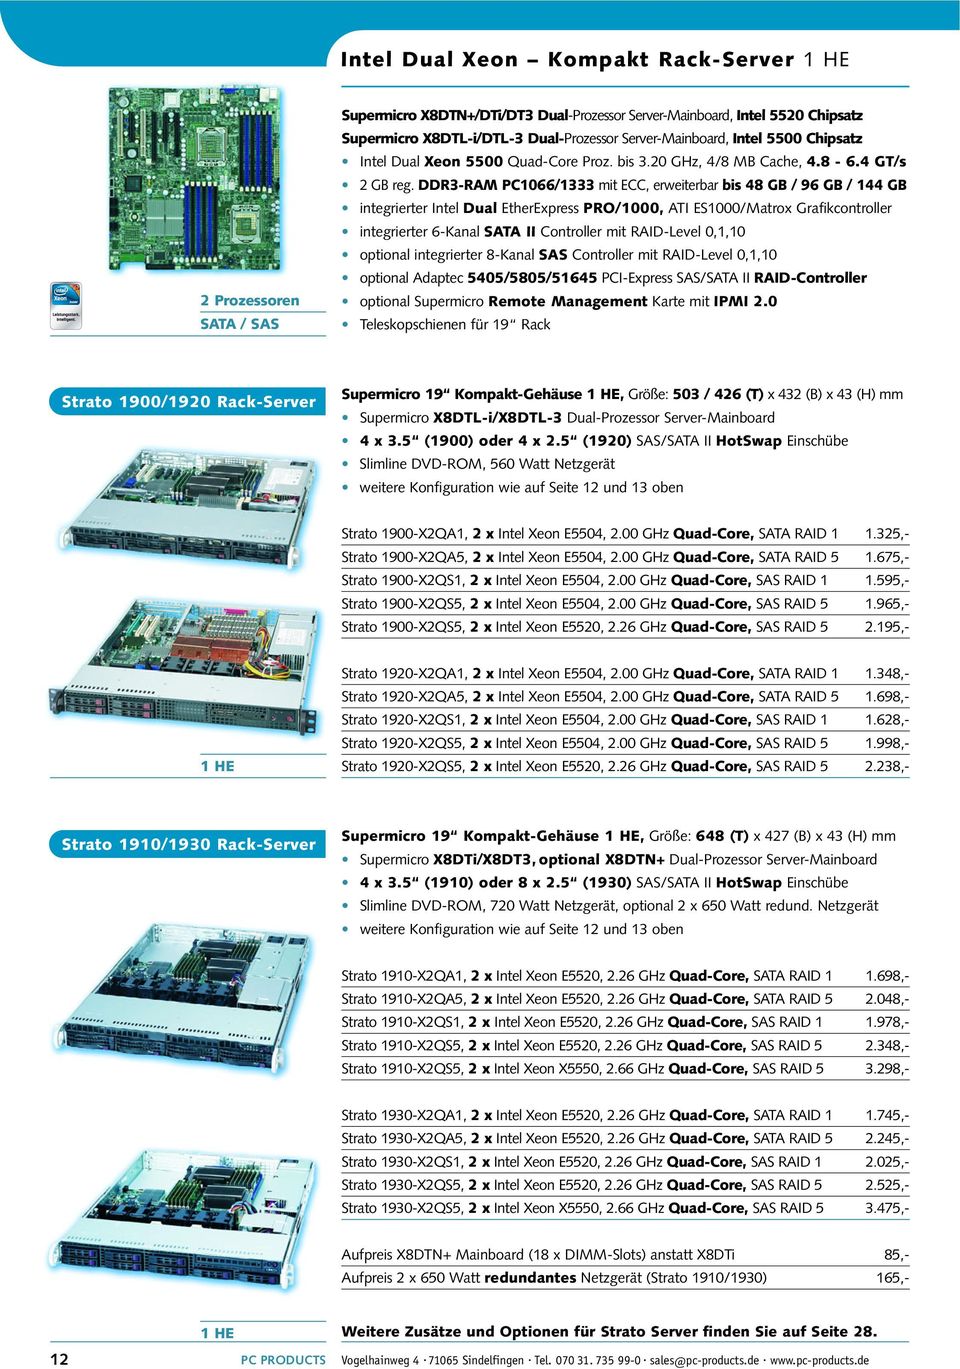 DDR3-RAM PC1066/1333 mit ECC, erweiterbar bis 48 GB / 96 GB / 144 GB integrierter Intel Dual EtherExpress PRO/1000, ATI ES1000/Matrox Grafikcontroller integrierter 6-Kanal SATA II Controller mit